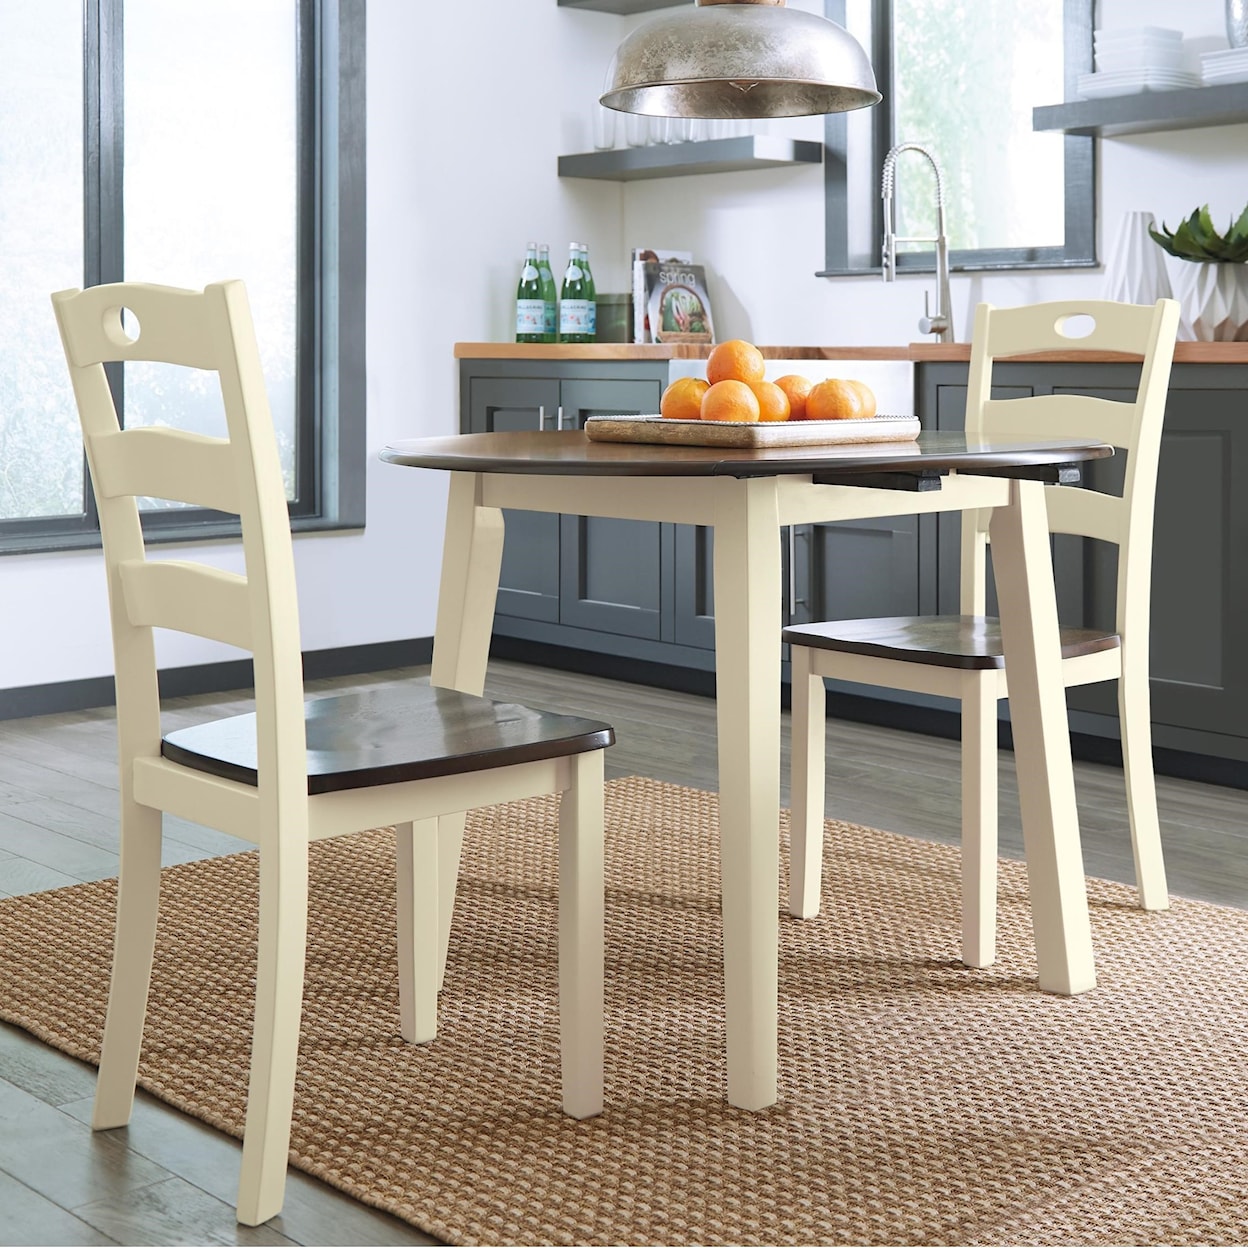 Ashley Furniture Signature Design Woodanville 3-Piece Round Drop Leaf Table Set